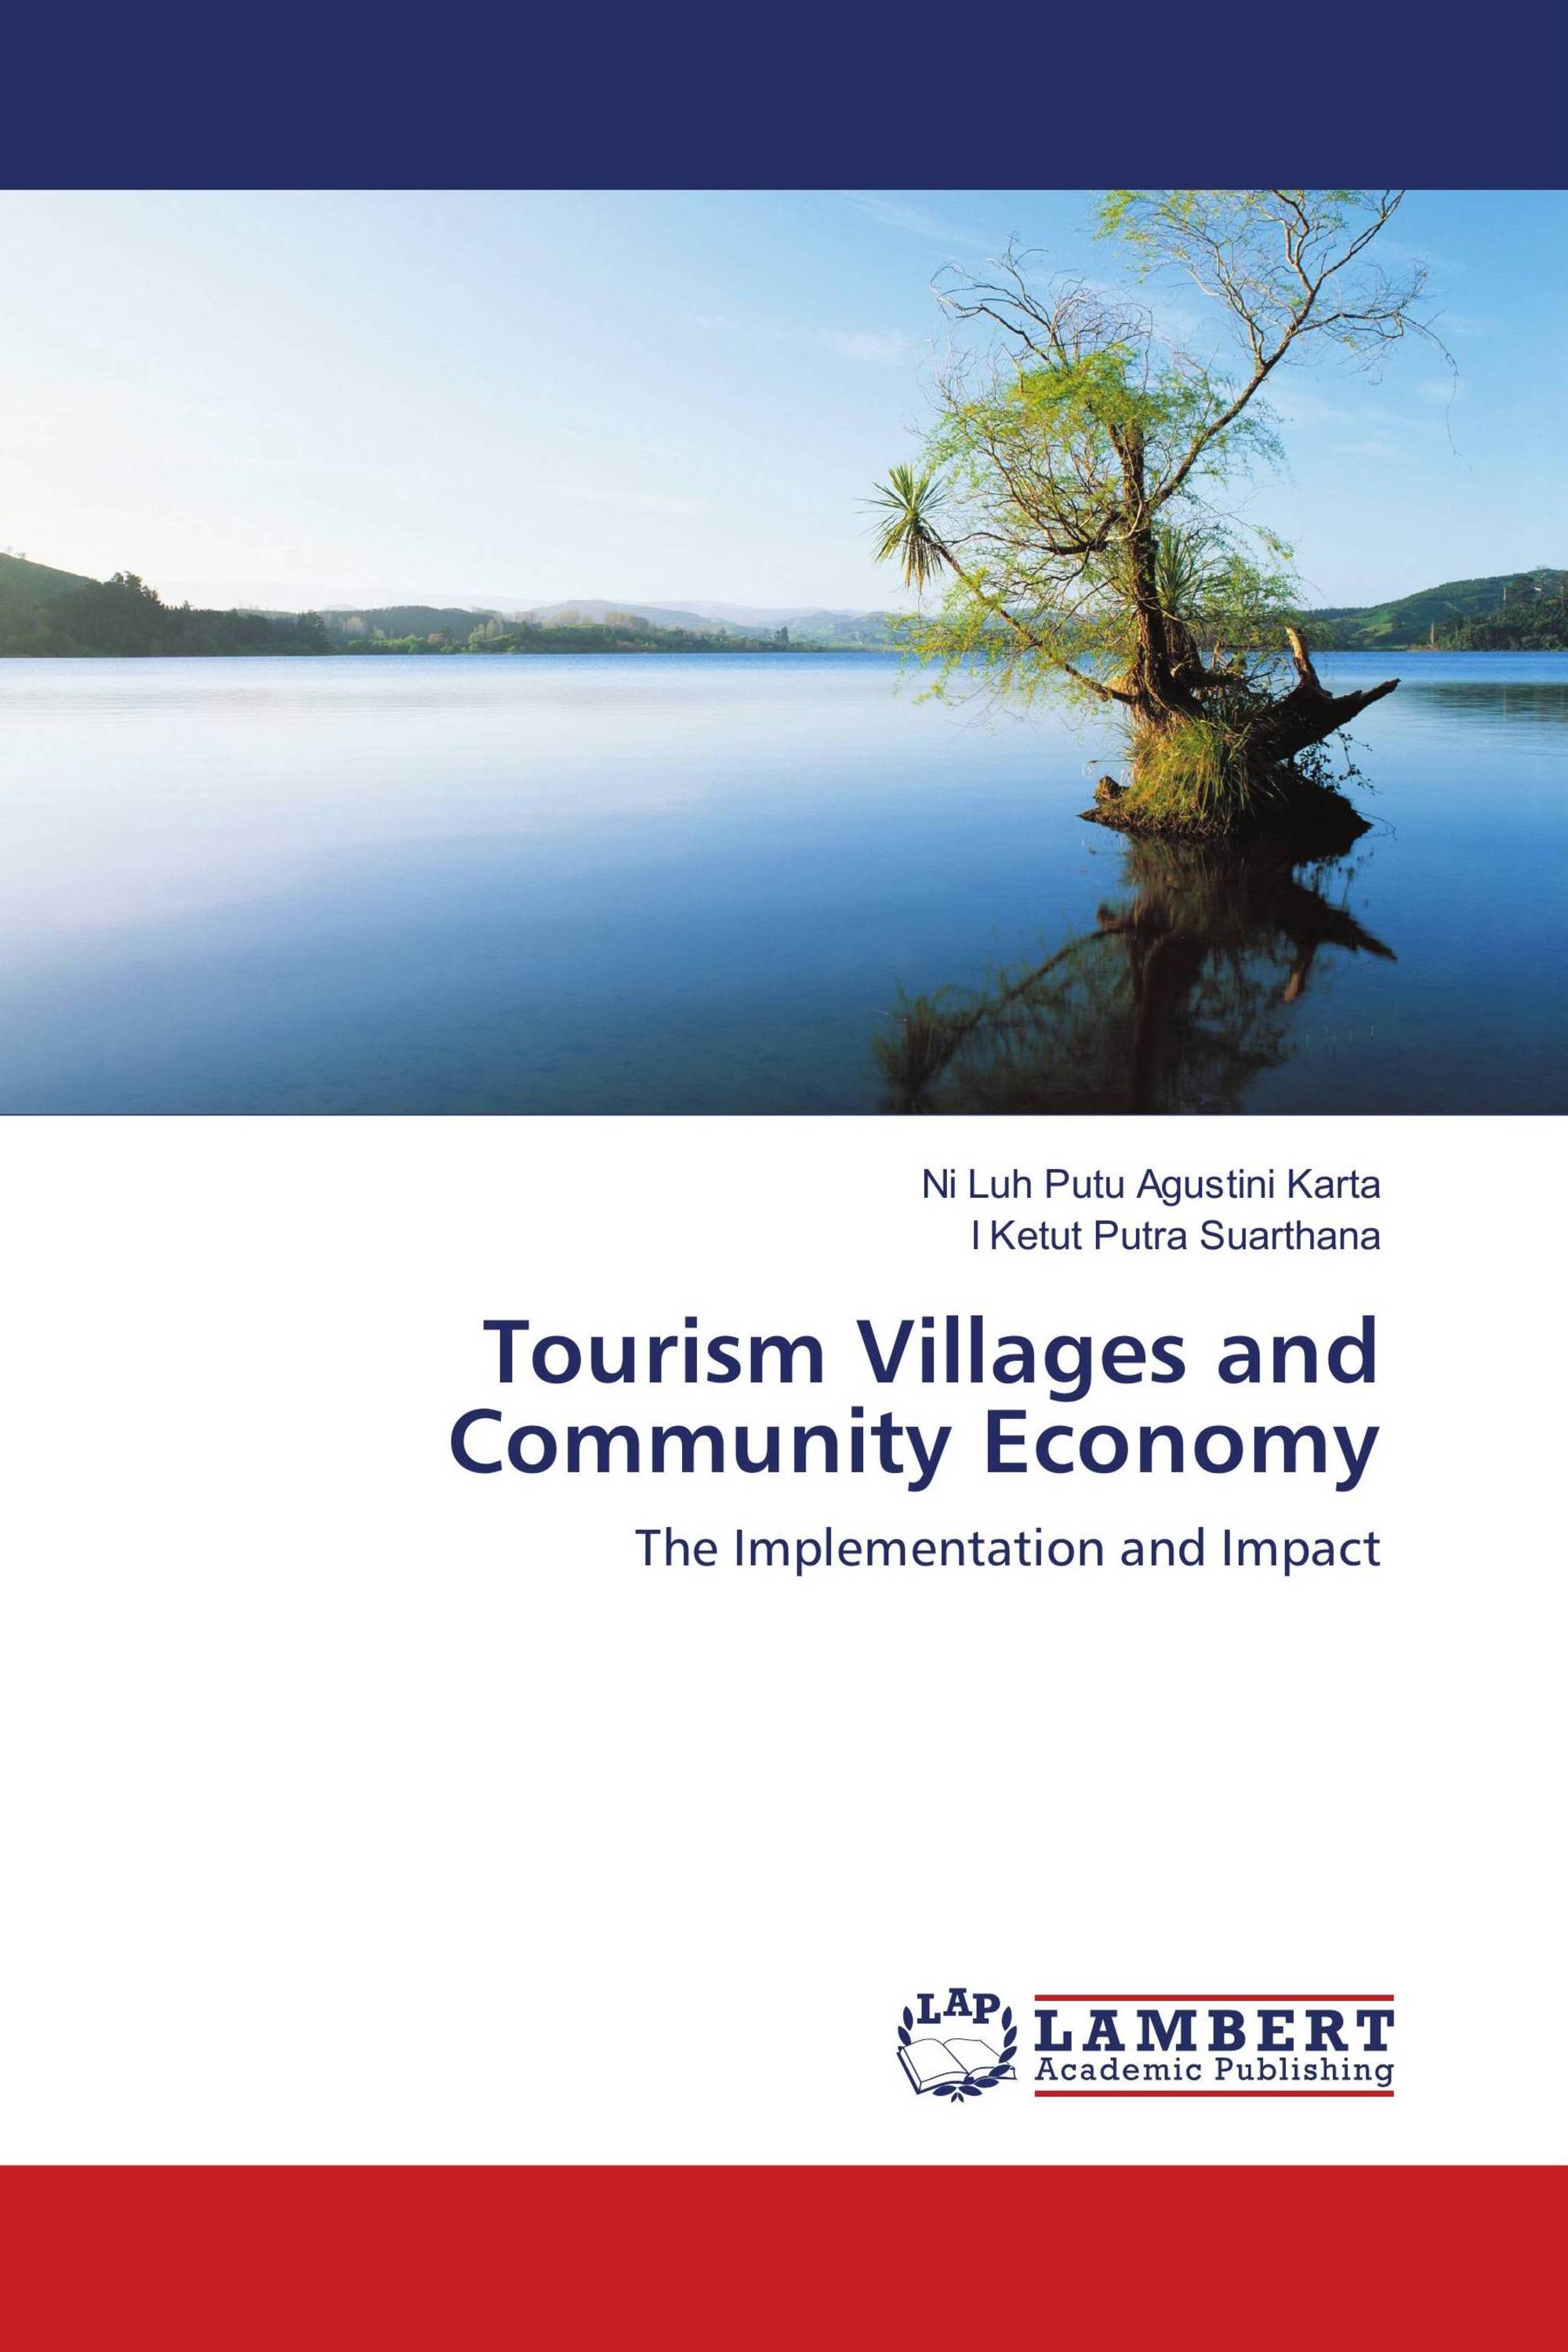 Tourism Villages and Community Economy